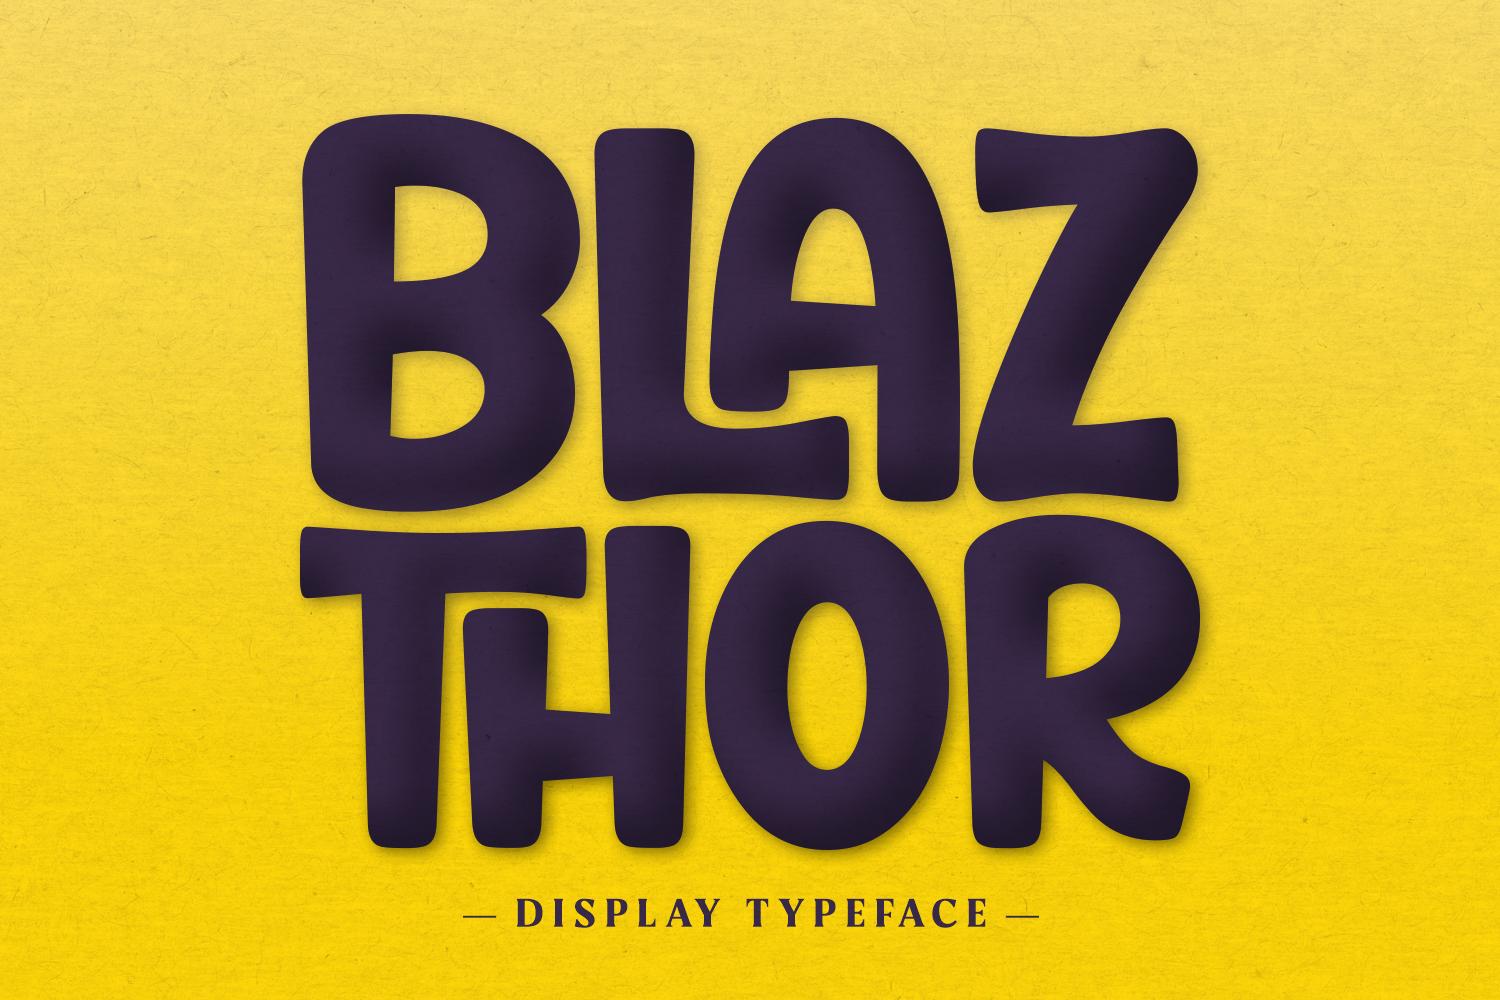 Blaz Thor Font